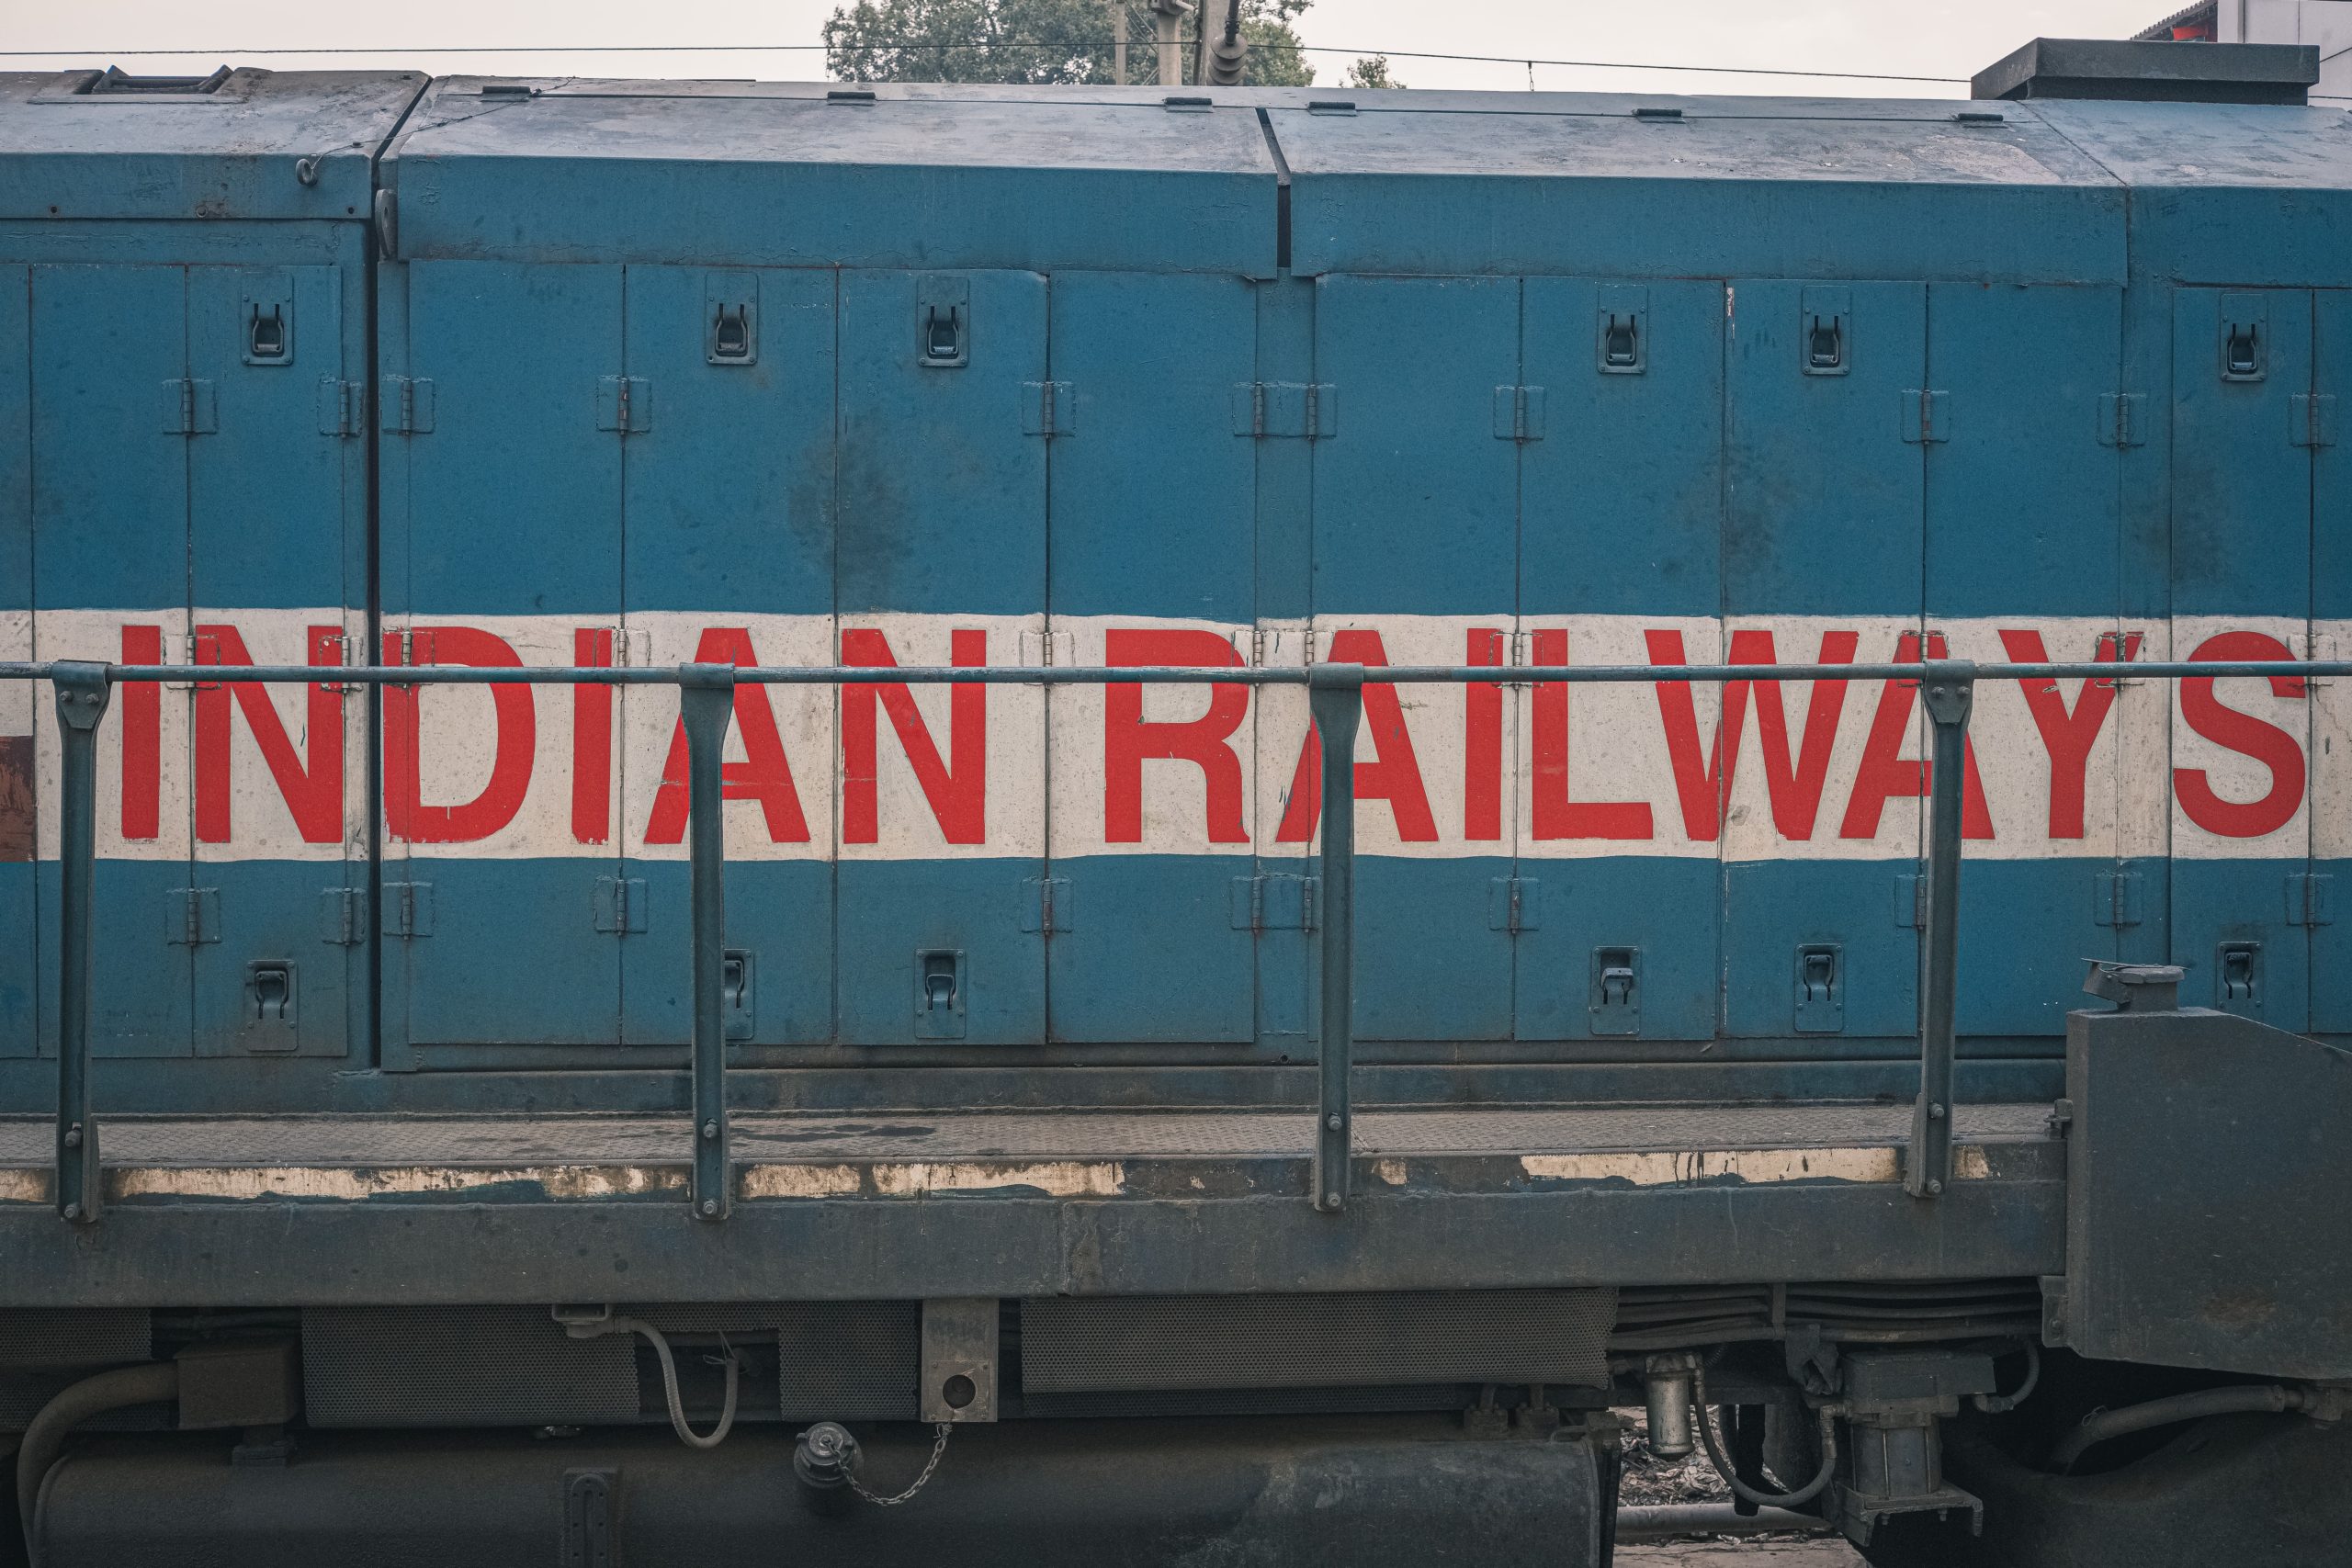 Indian Railways waste management system draws CAG’s flak